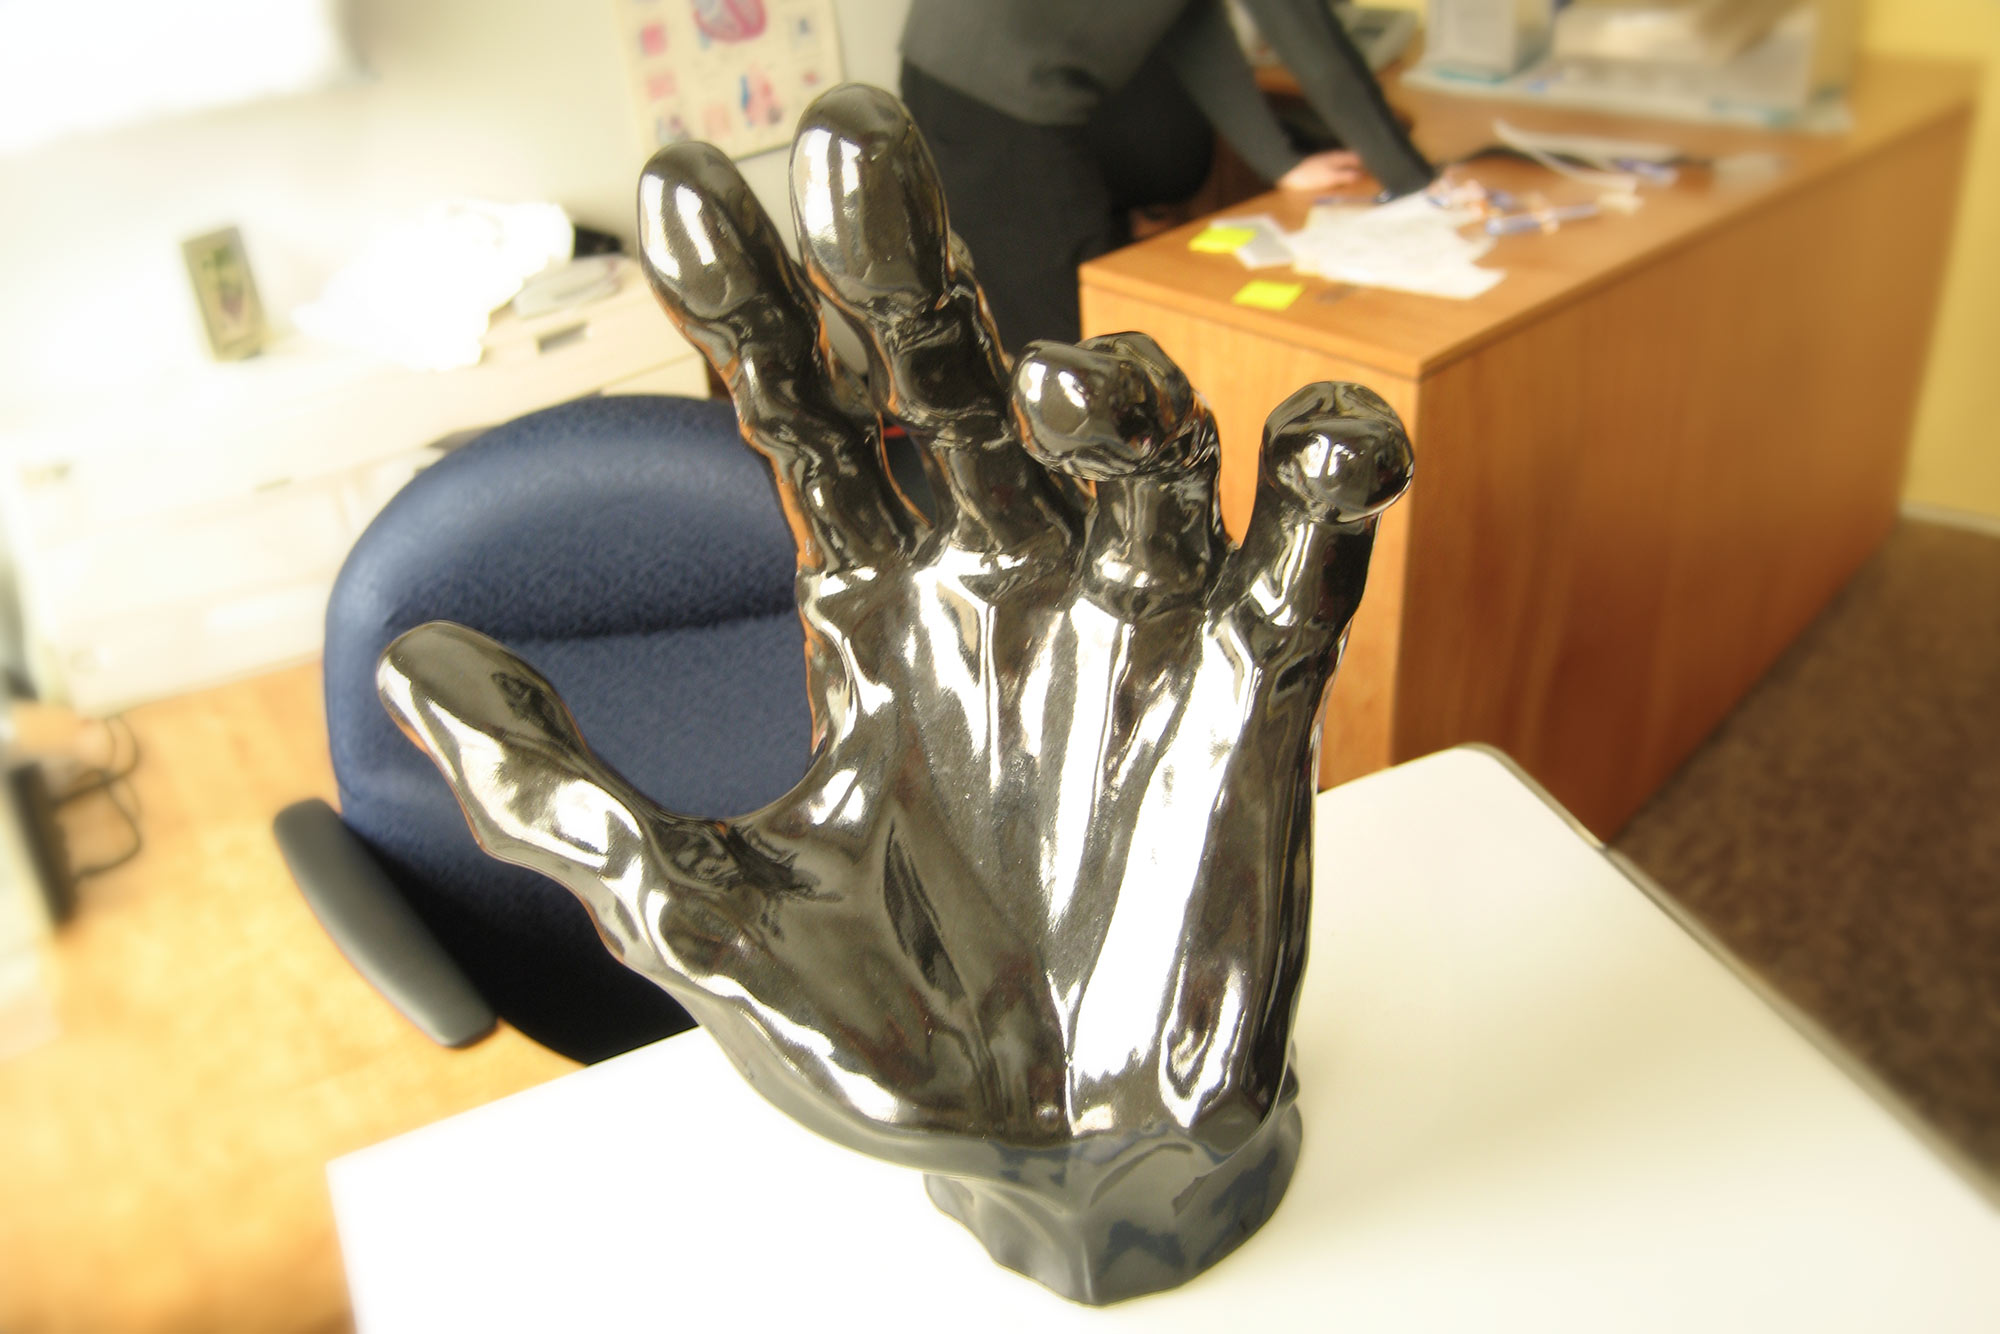 THE BLACK HAND